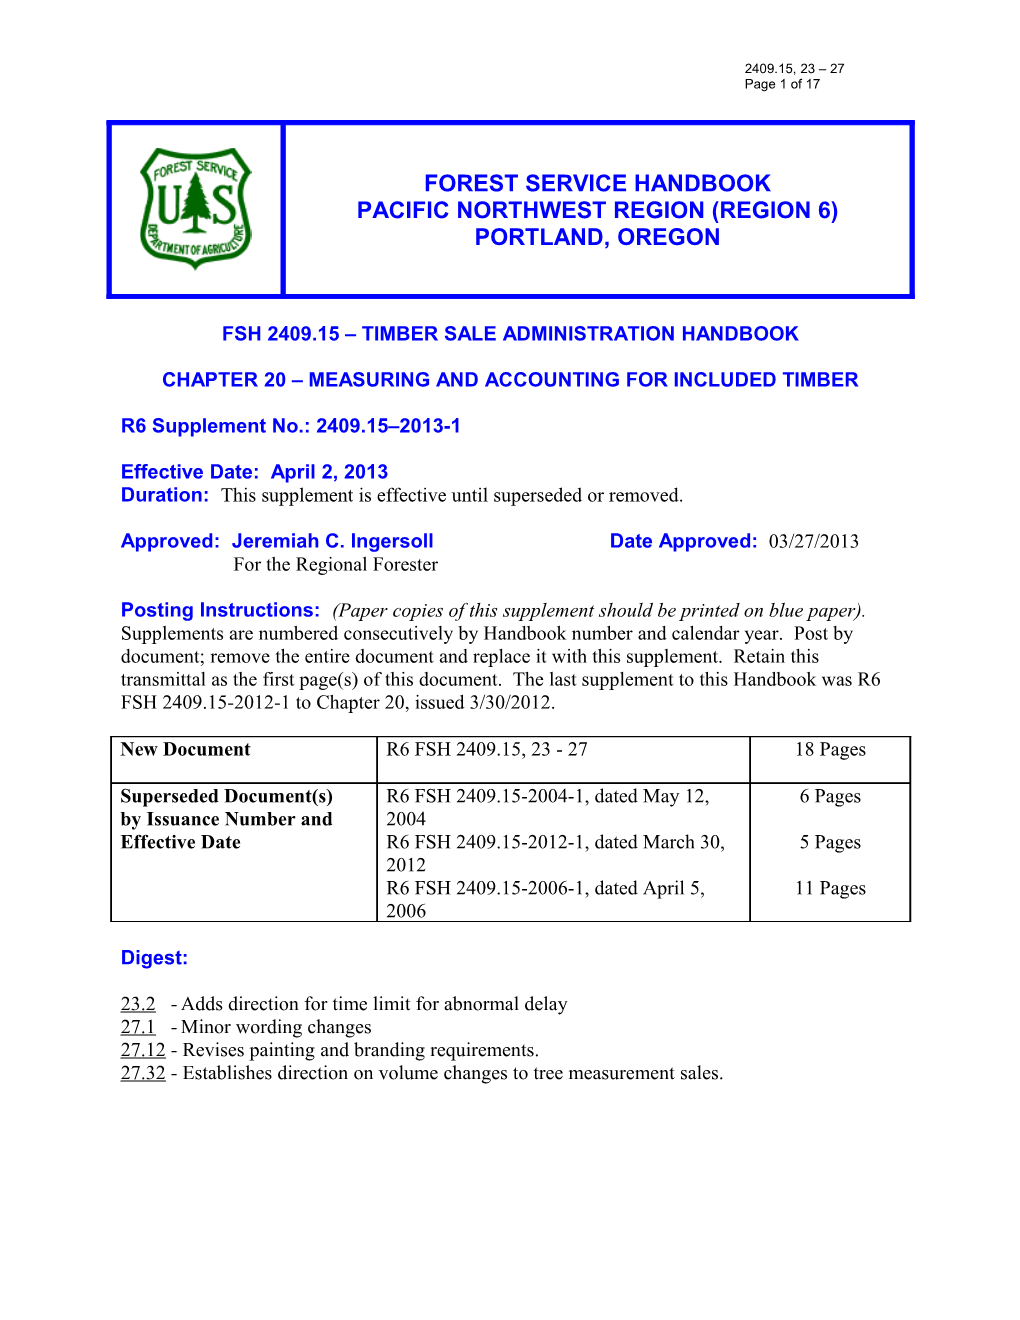 Fsh 2409.15 Timber Sale Administration Handbook